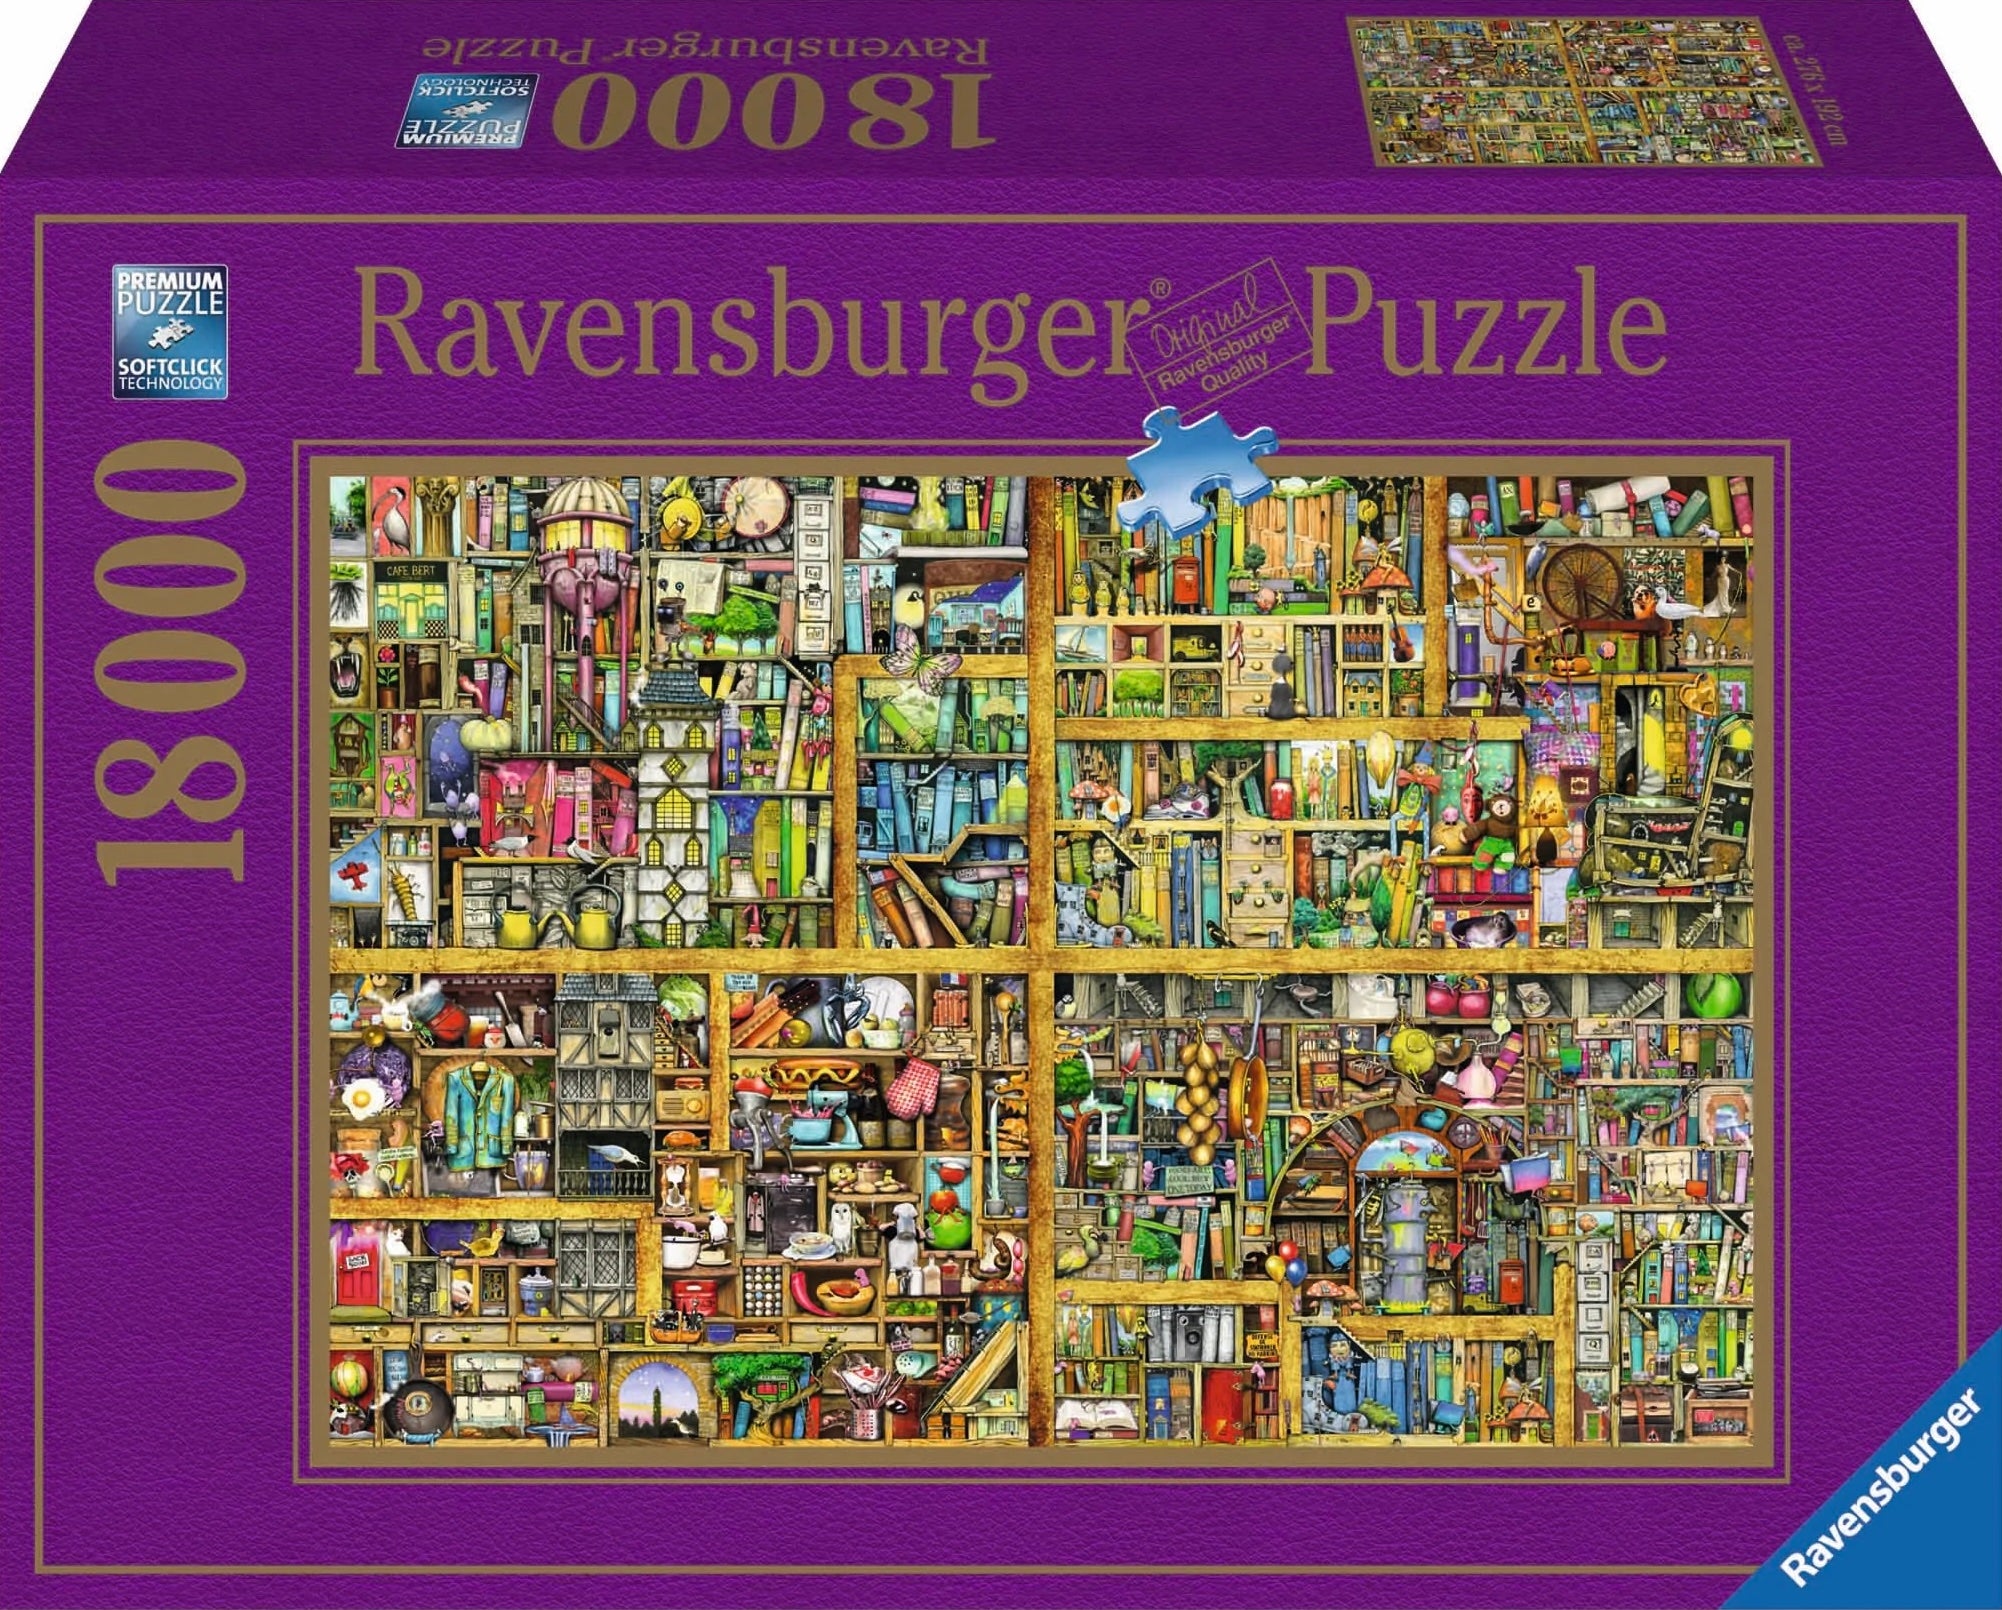 California Map Jigsaw Puzzle 300 pieces premium fun colourful